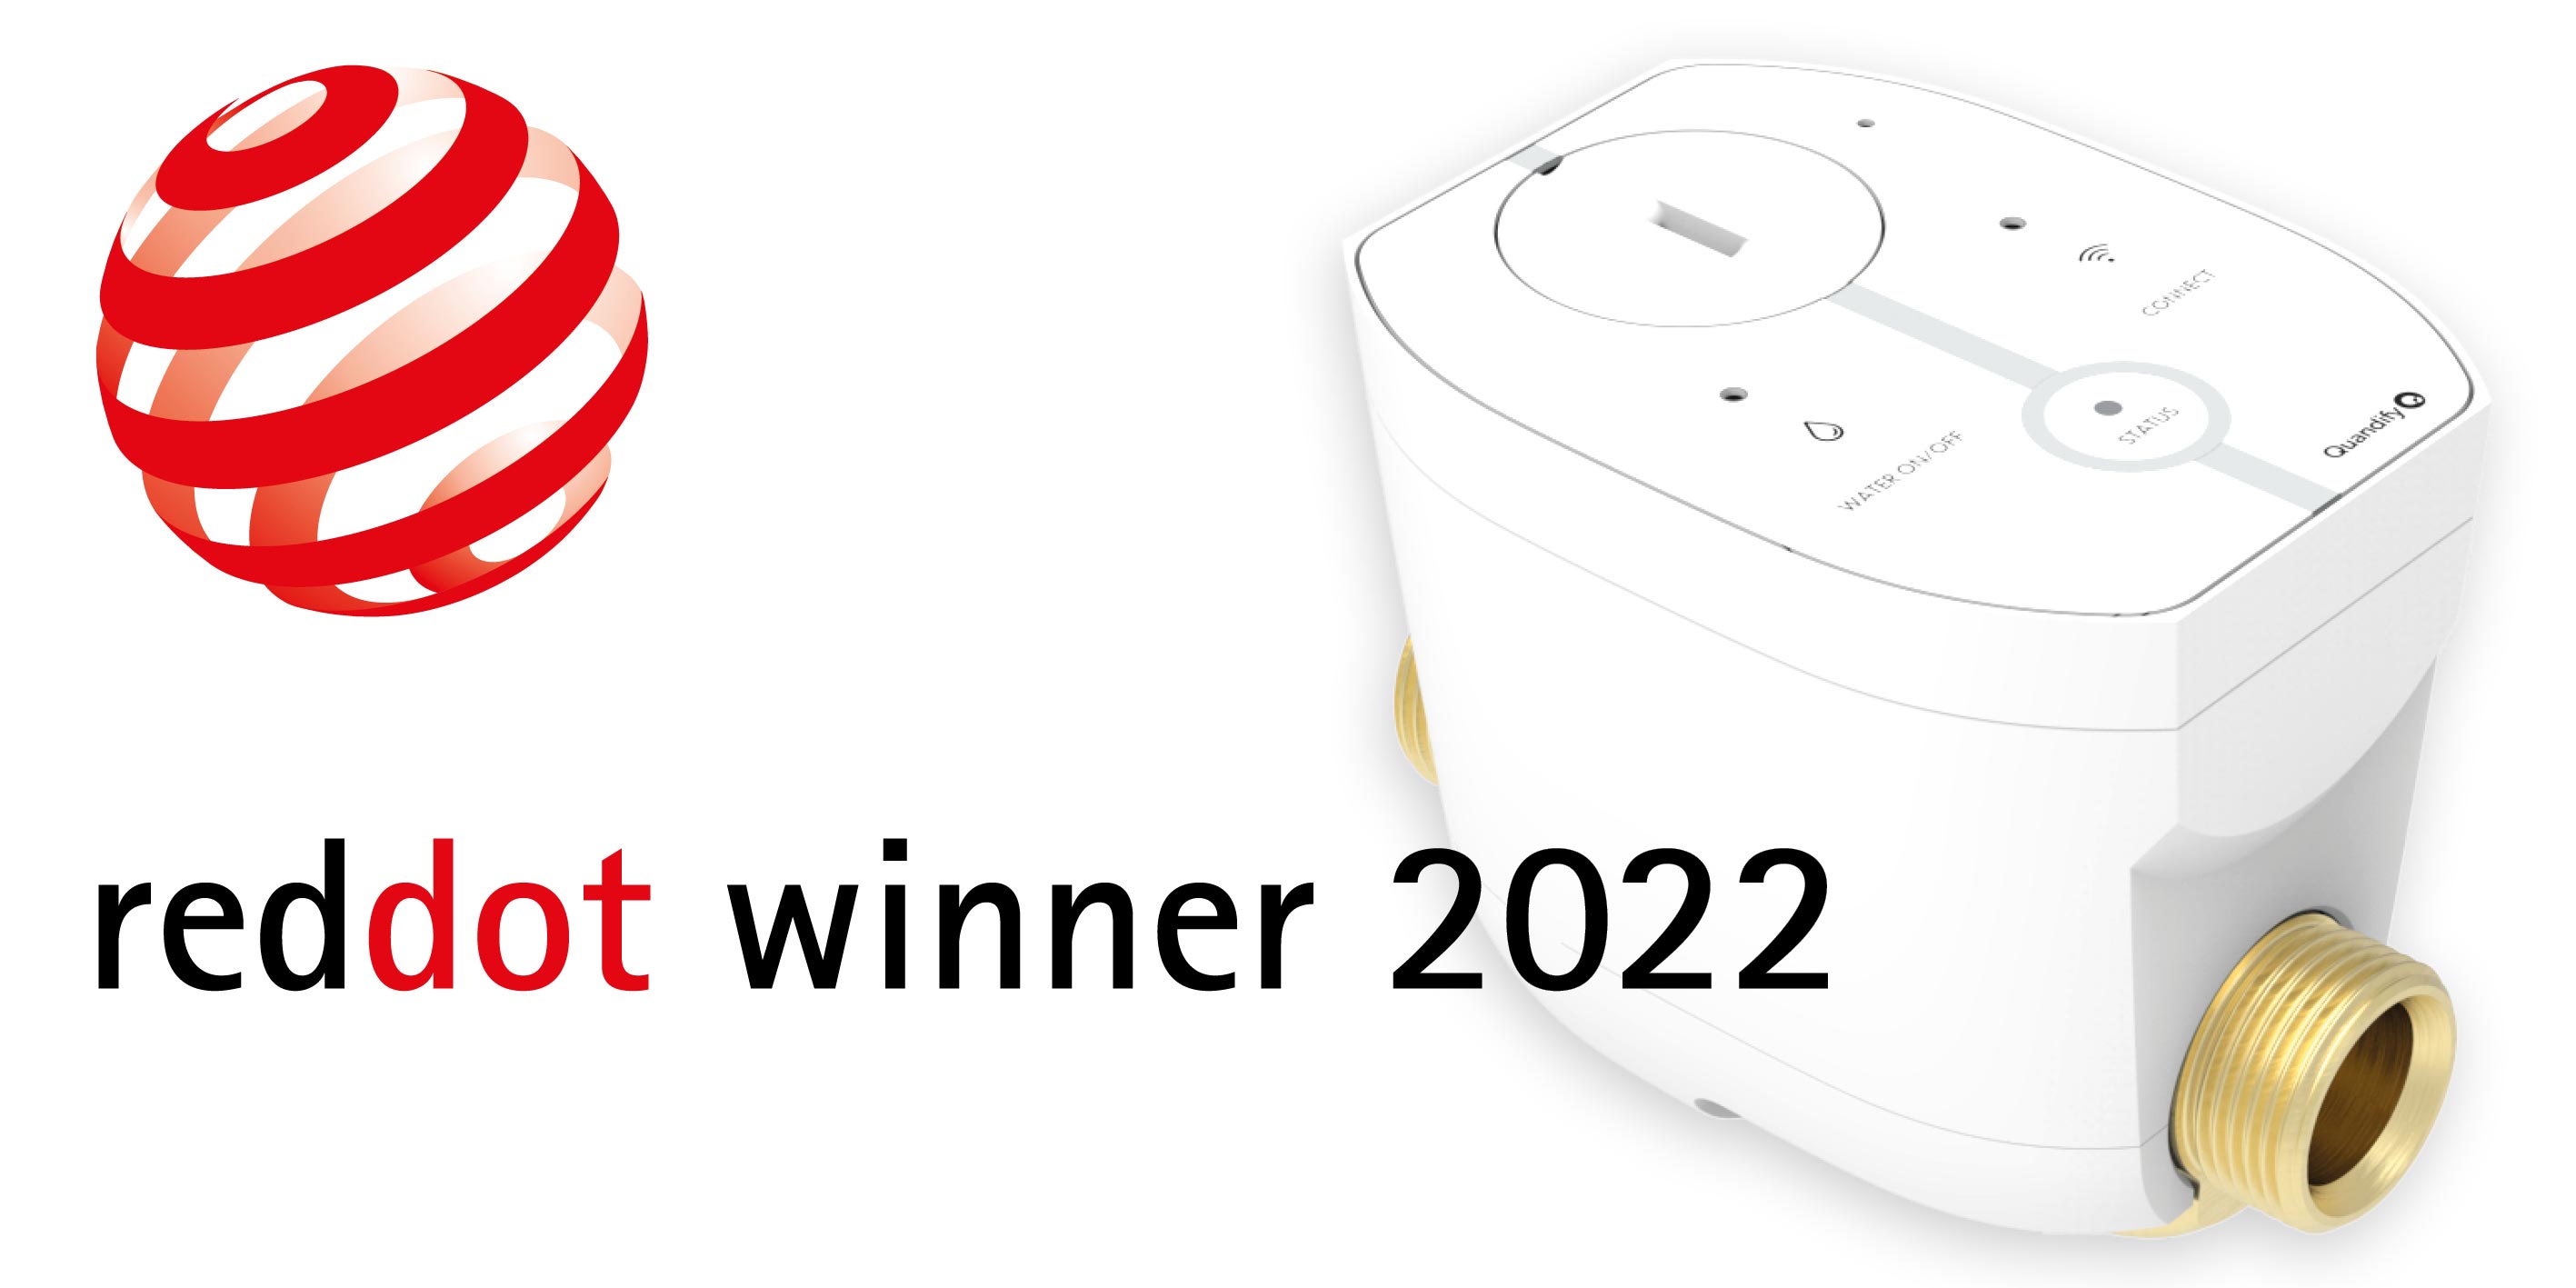 Vattenfelsbrytaren LK CubicSecure vinner Red Dot Design Award 2022